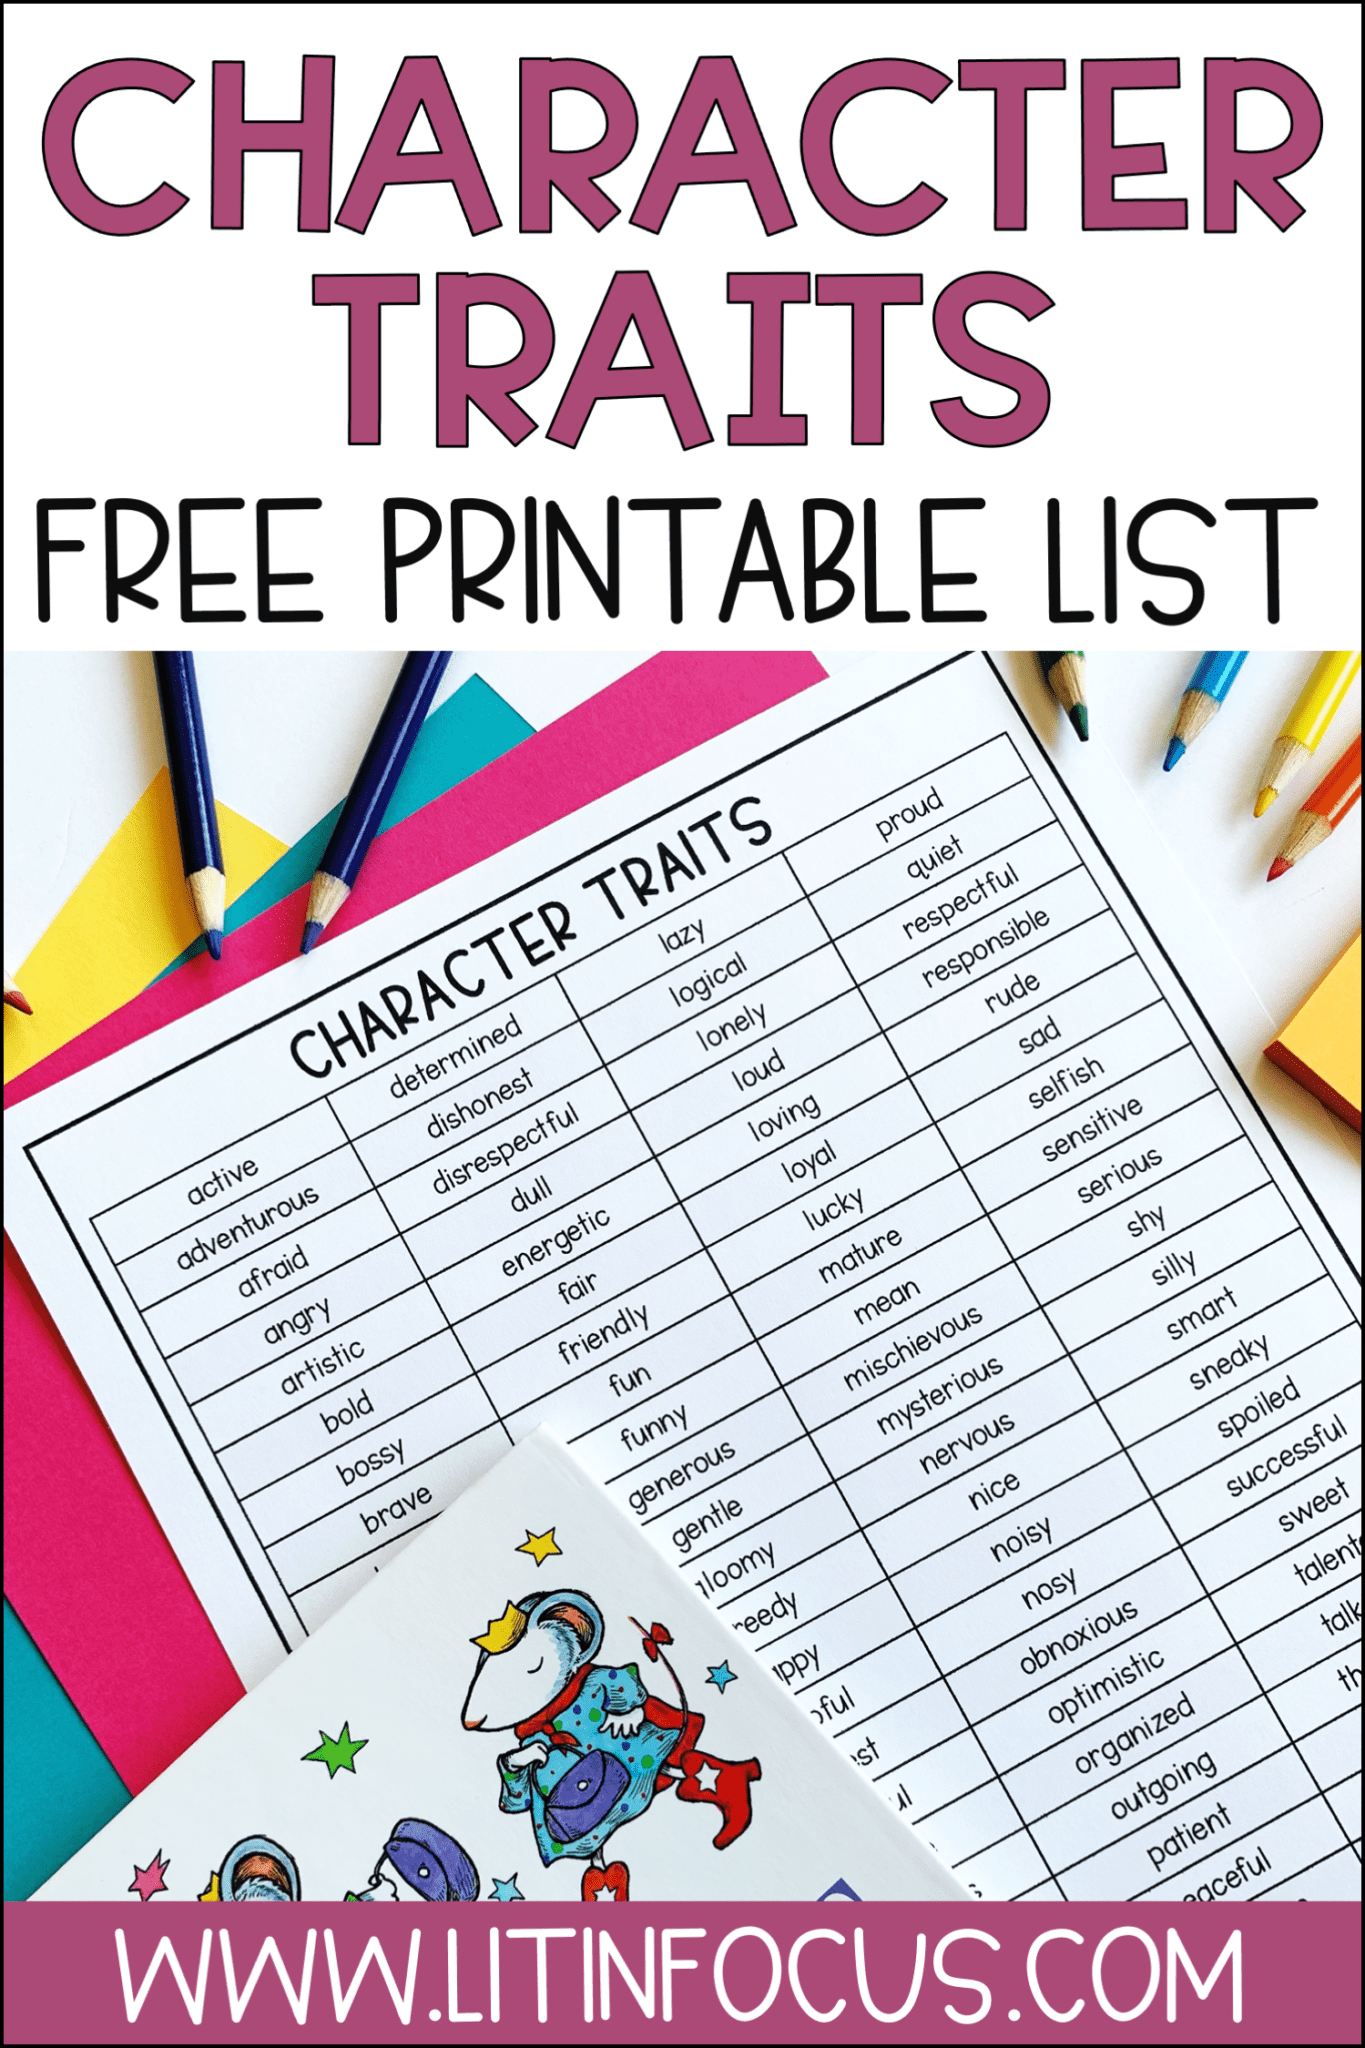 Free Printable List Of Positive Character Traits